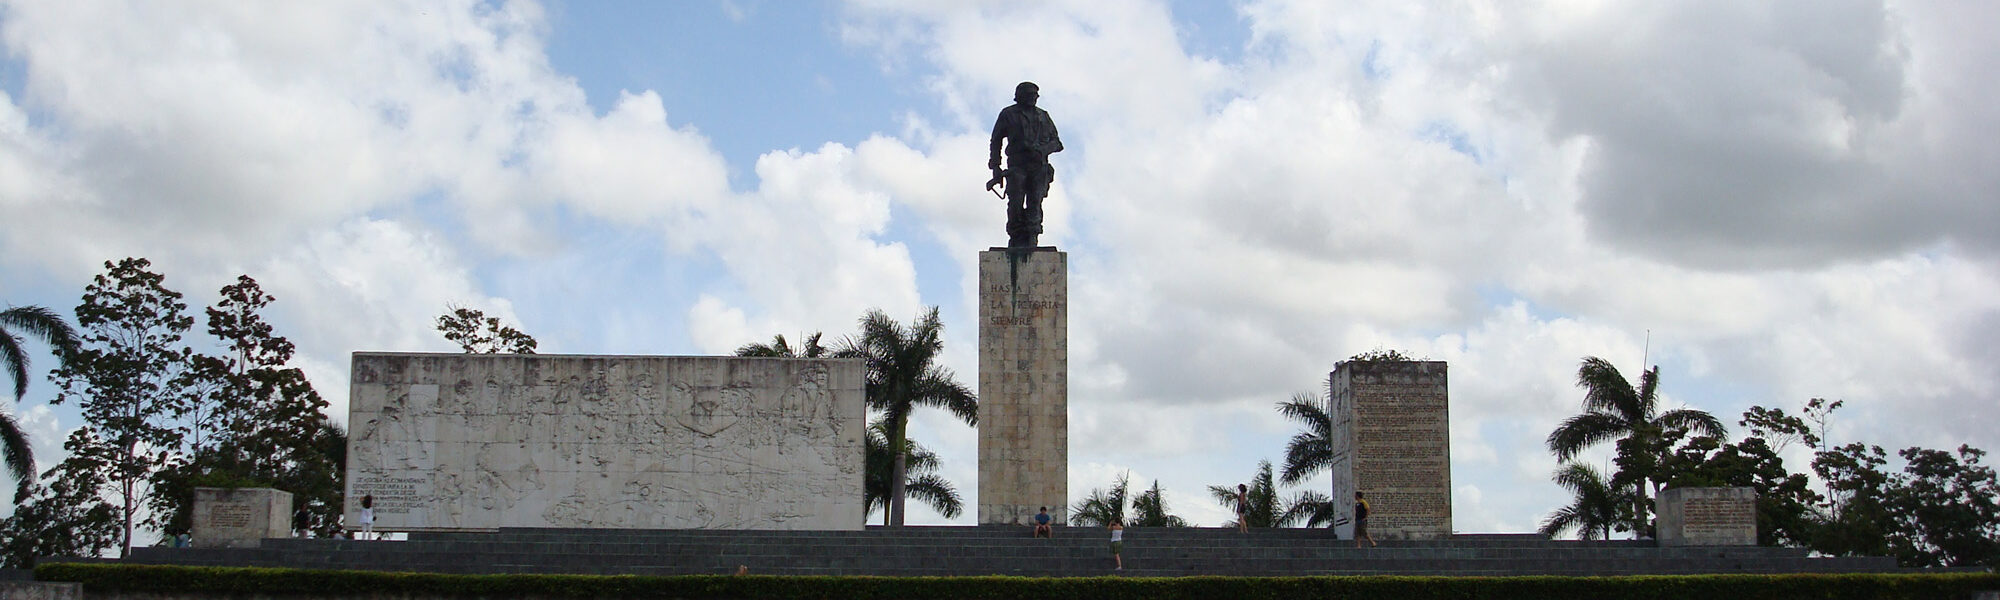 Monument 'Comandante Ernesto Che Guevara' - Santa Clara - Cuba